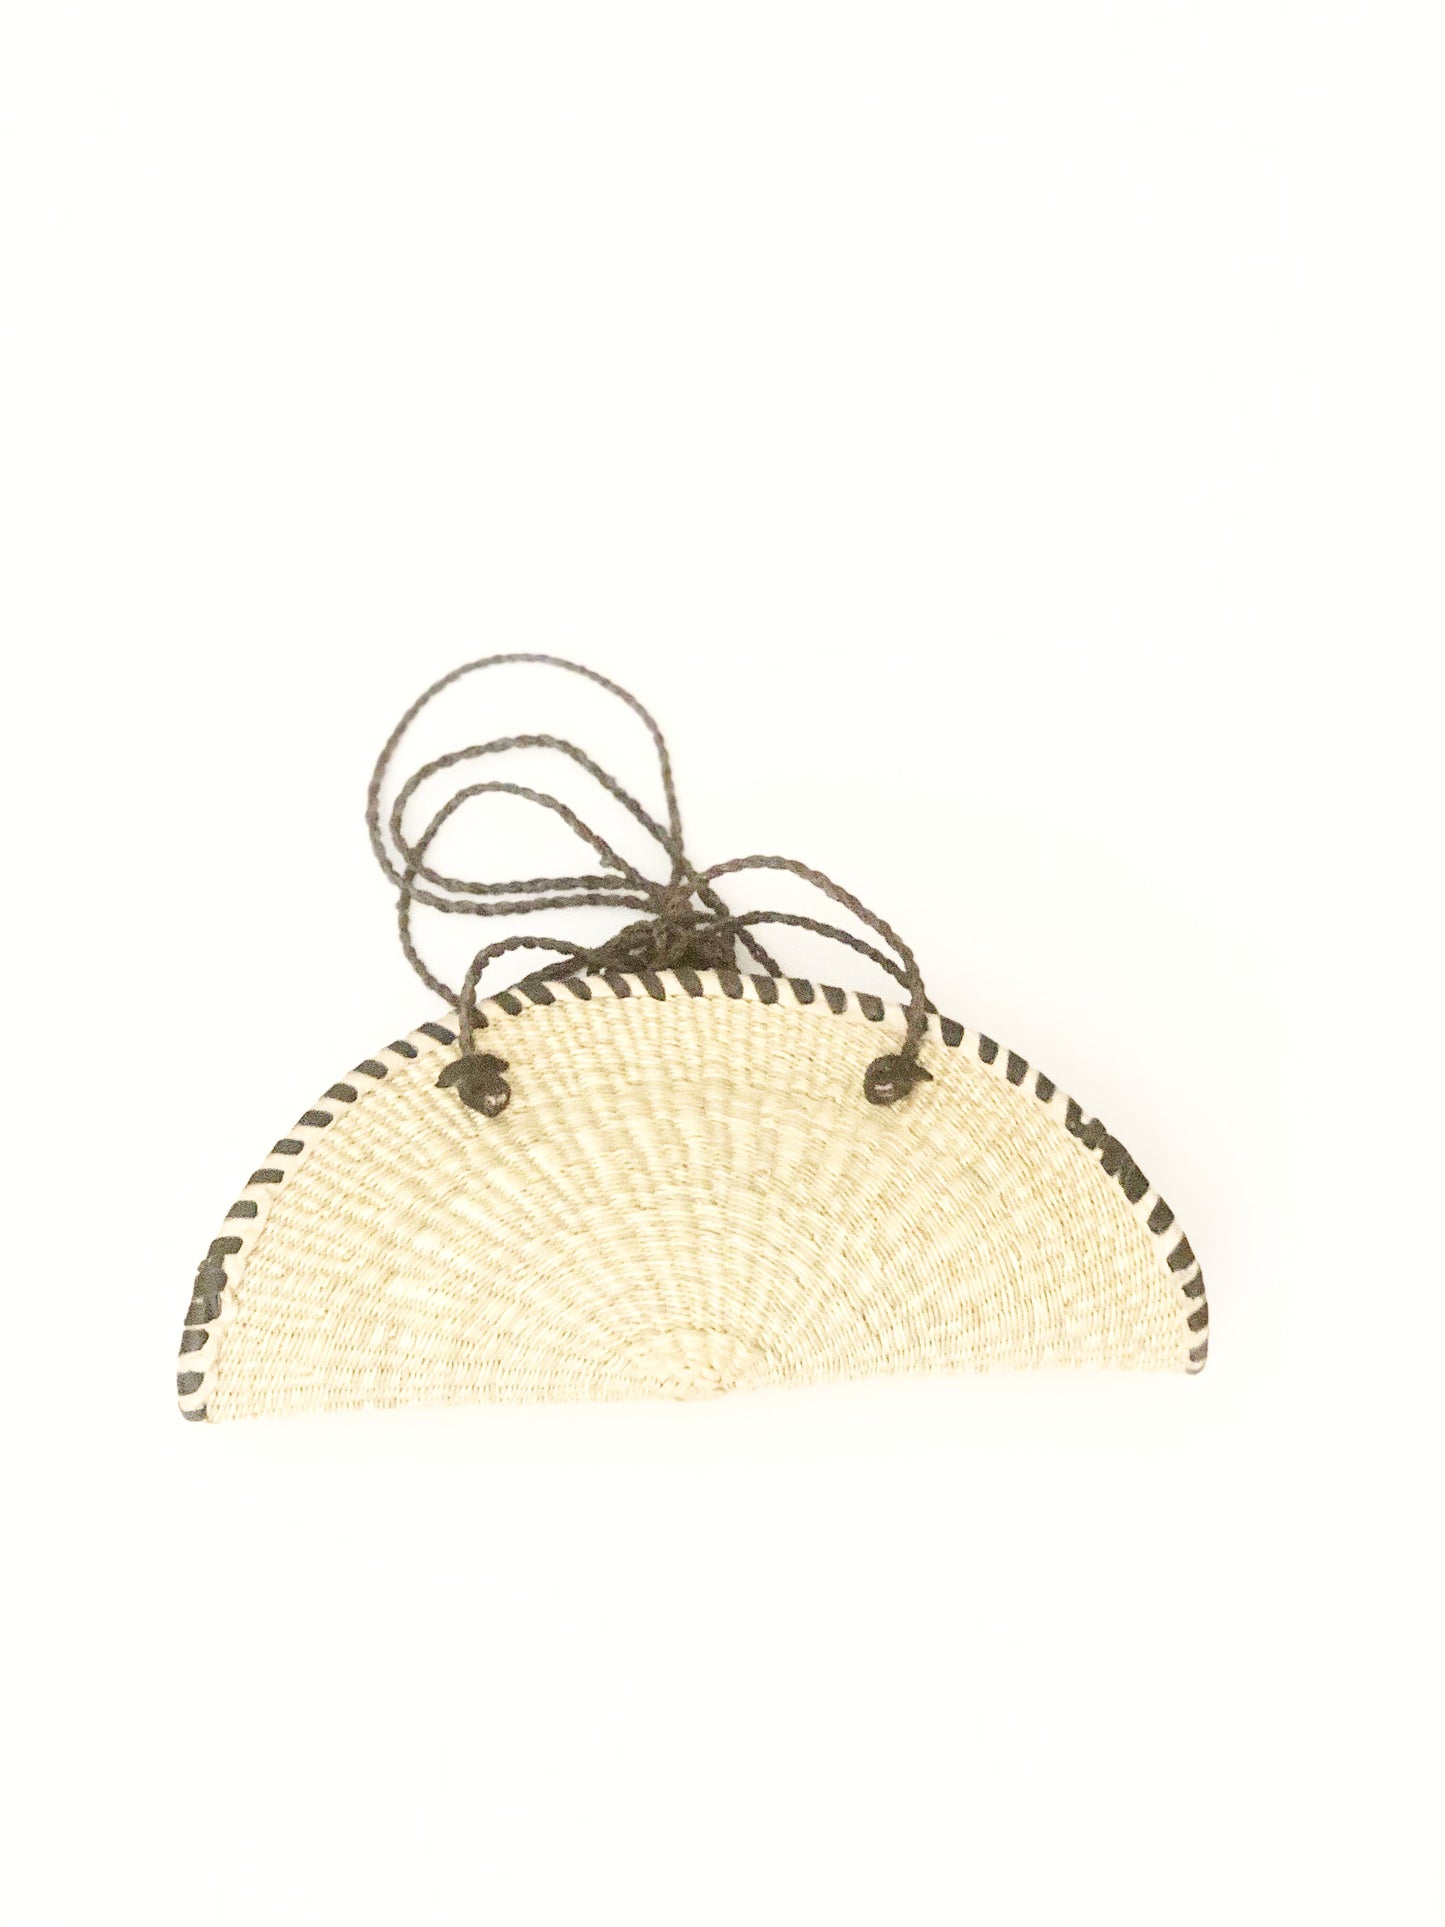 Fan rattan straw handmade bag